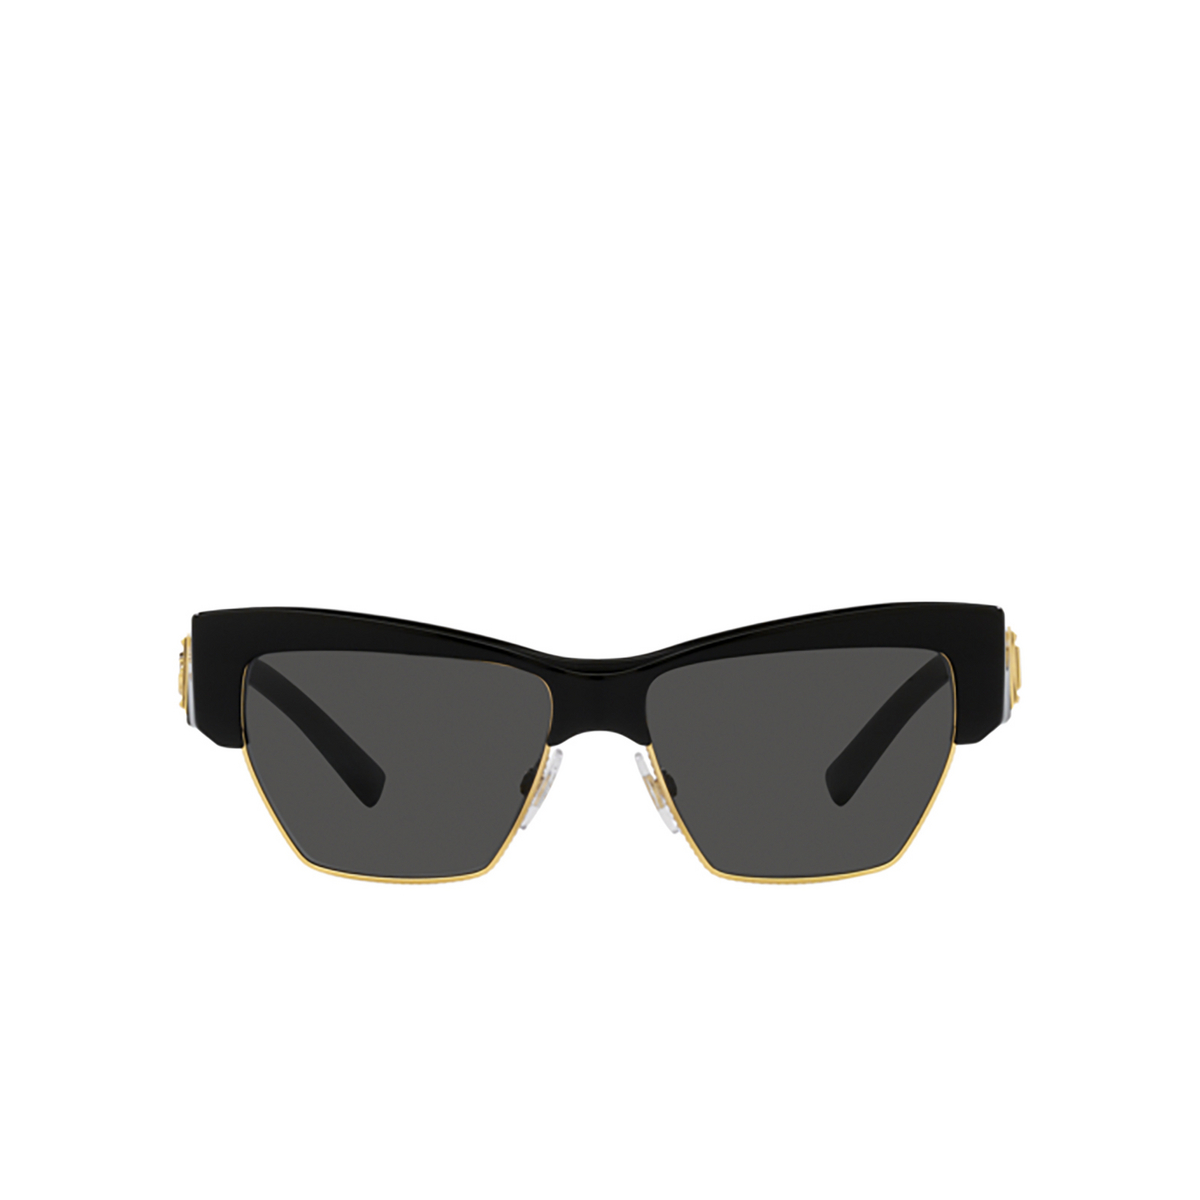 Dolce & Gabbana DG4415 Sunglasses 501/87 Black - front view